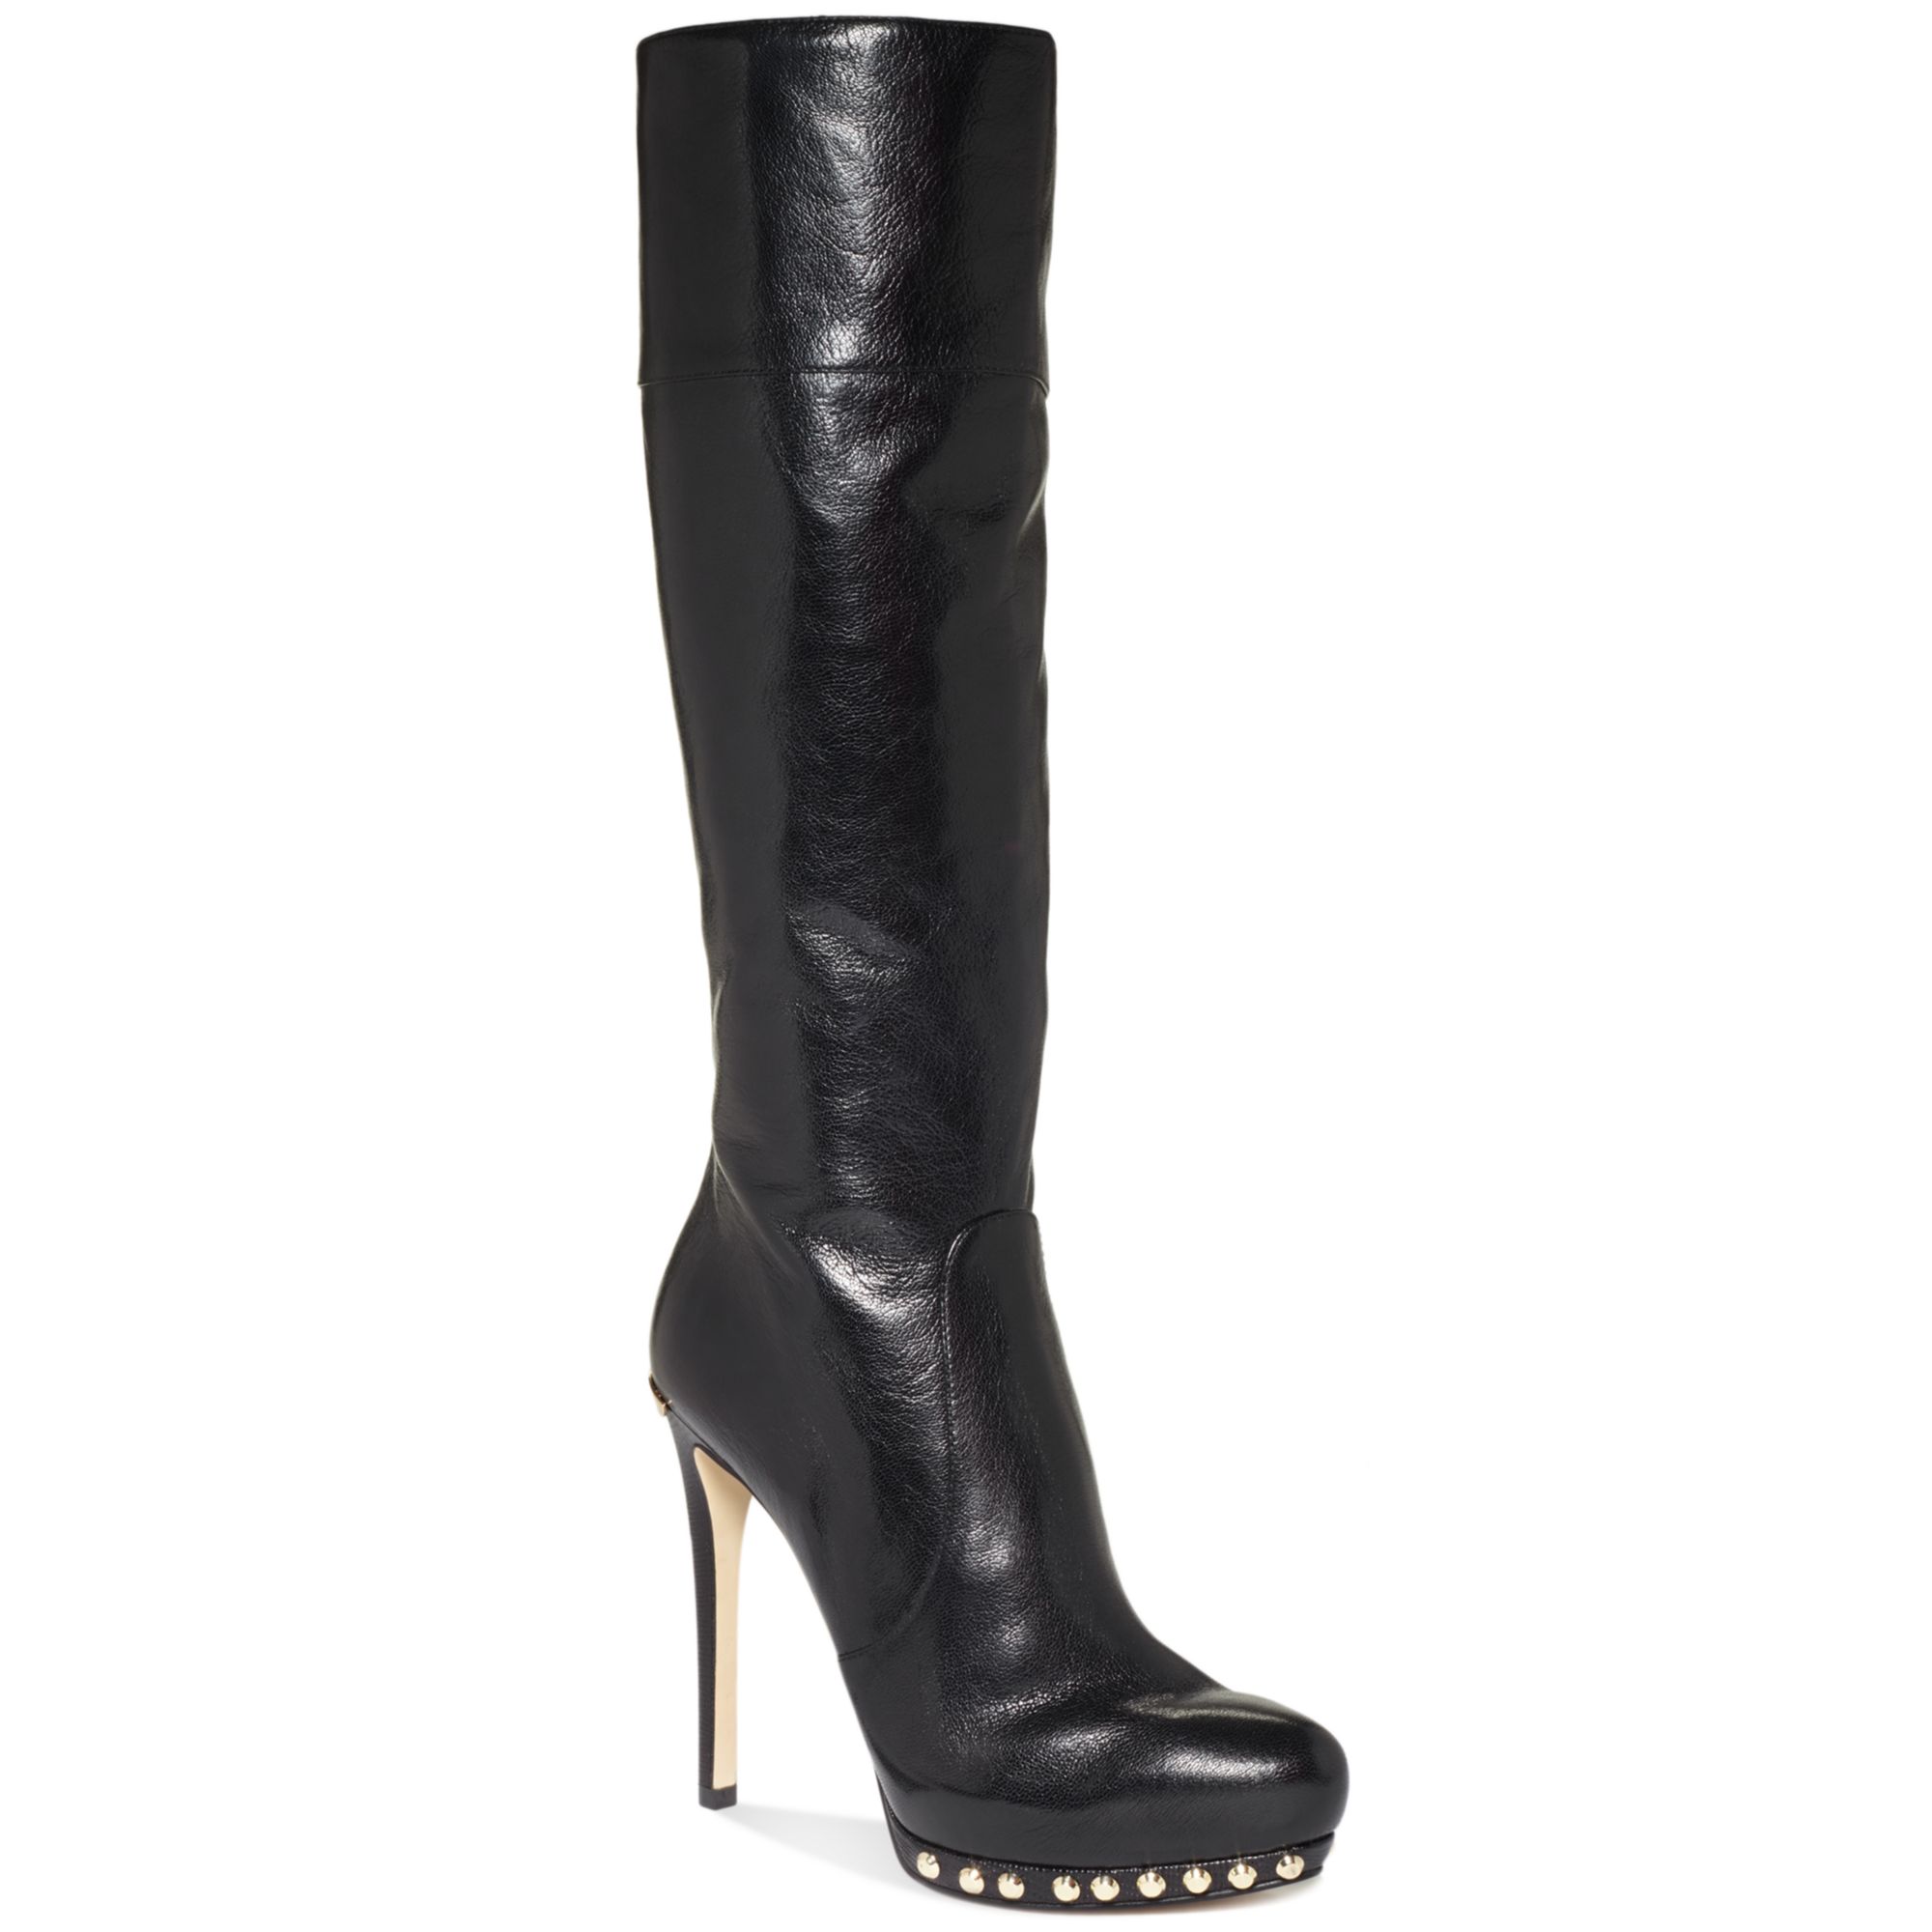 Lyst - Michael Kors Ailee Tall High Heel Dress Boots in Black